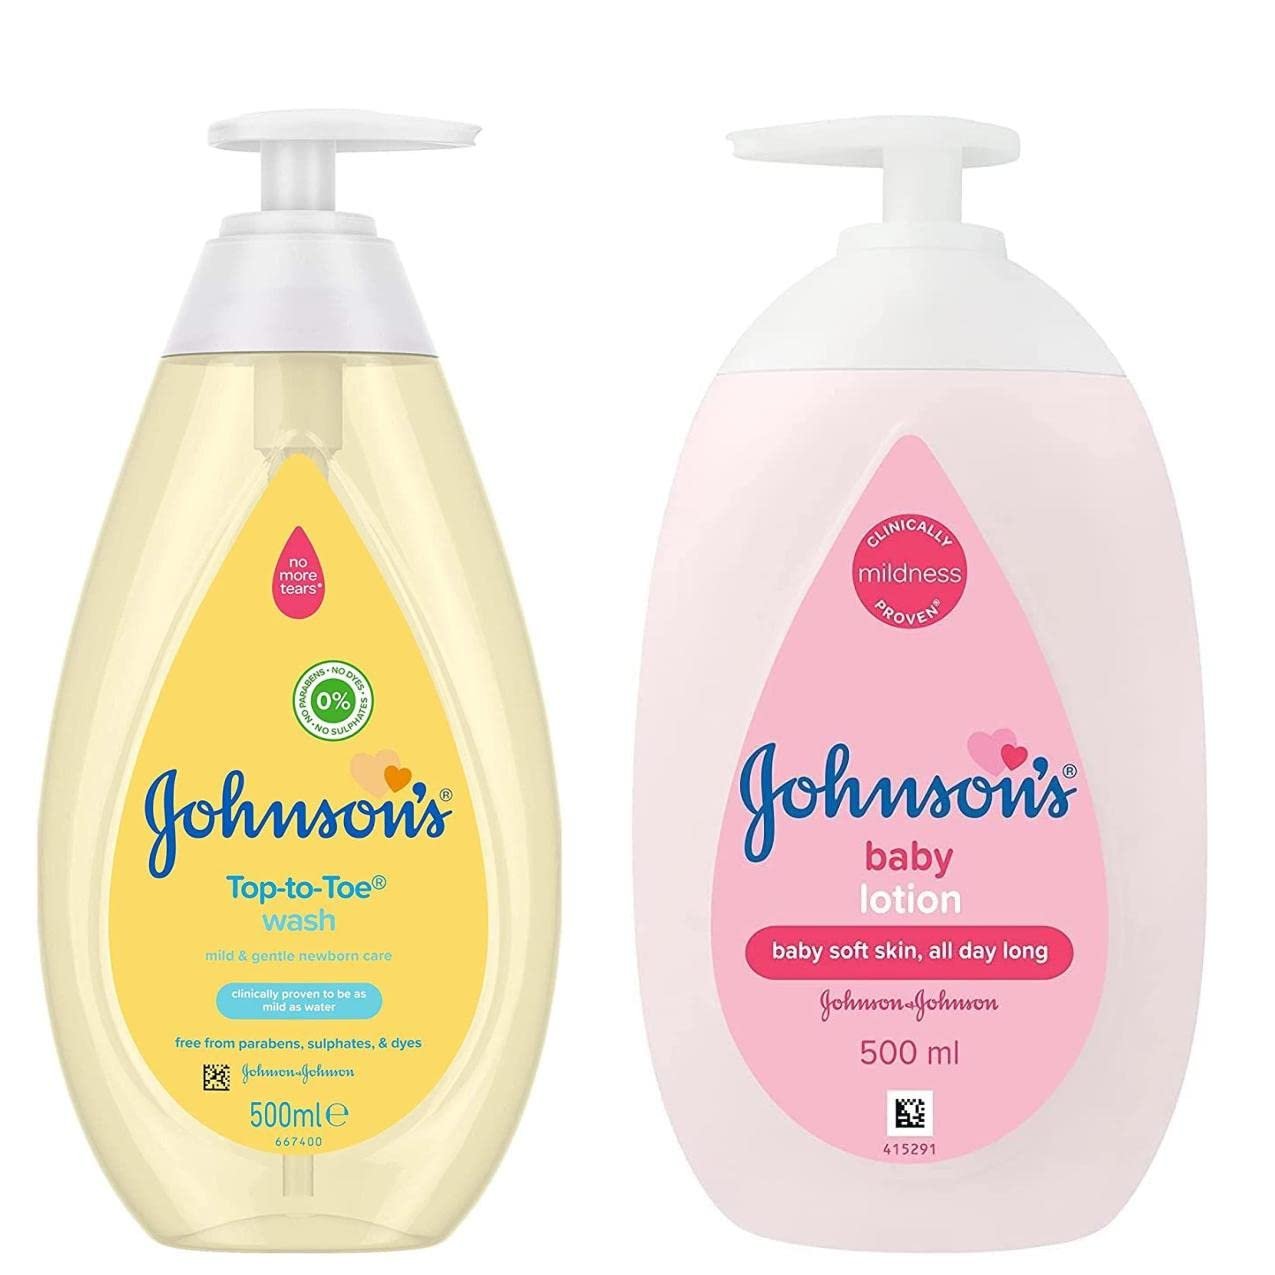 Johnsons Baby Shampoo Head to Toe Wash + Johnsons Baby Lotion 500ml - image 1 of 2